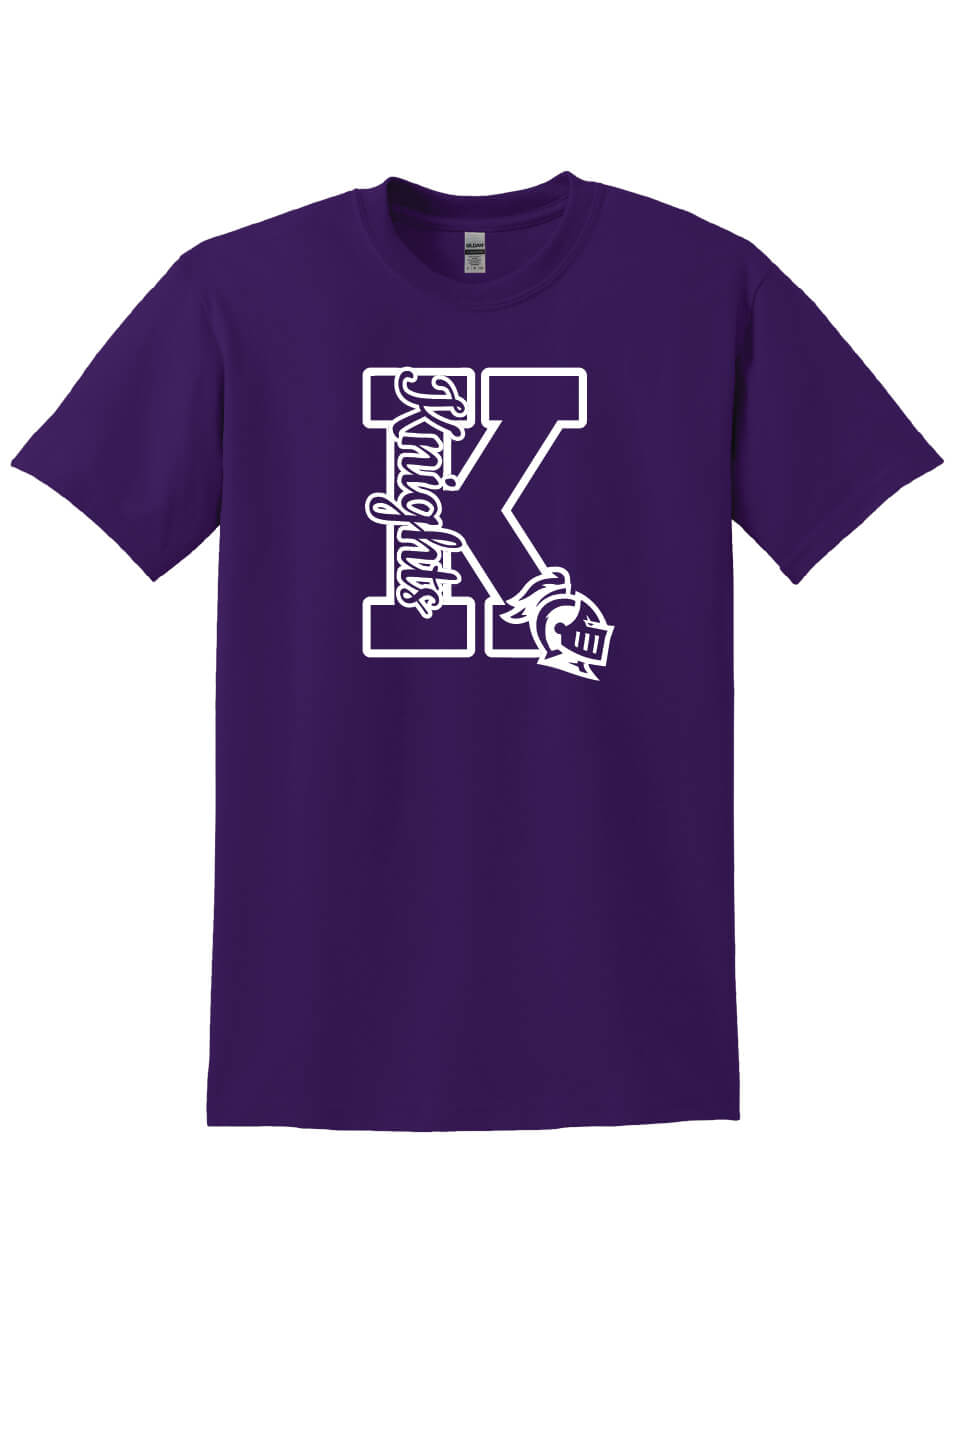 Knights "K" Short Sleeve T-Shirt purple